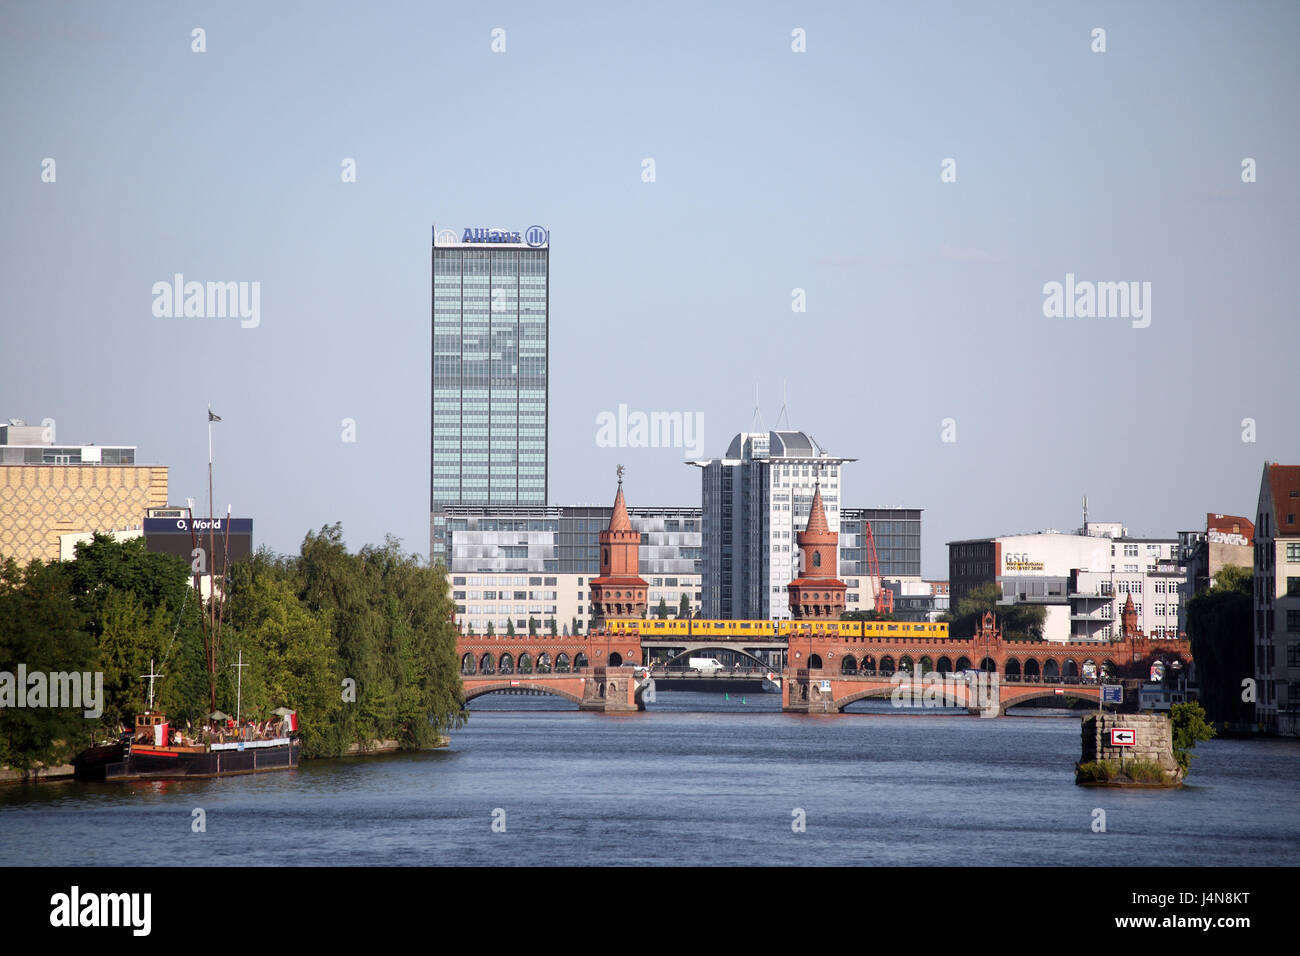 Germany, Berlin, upper tree bridge, alliance building, Stock Photo